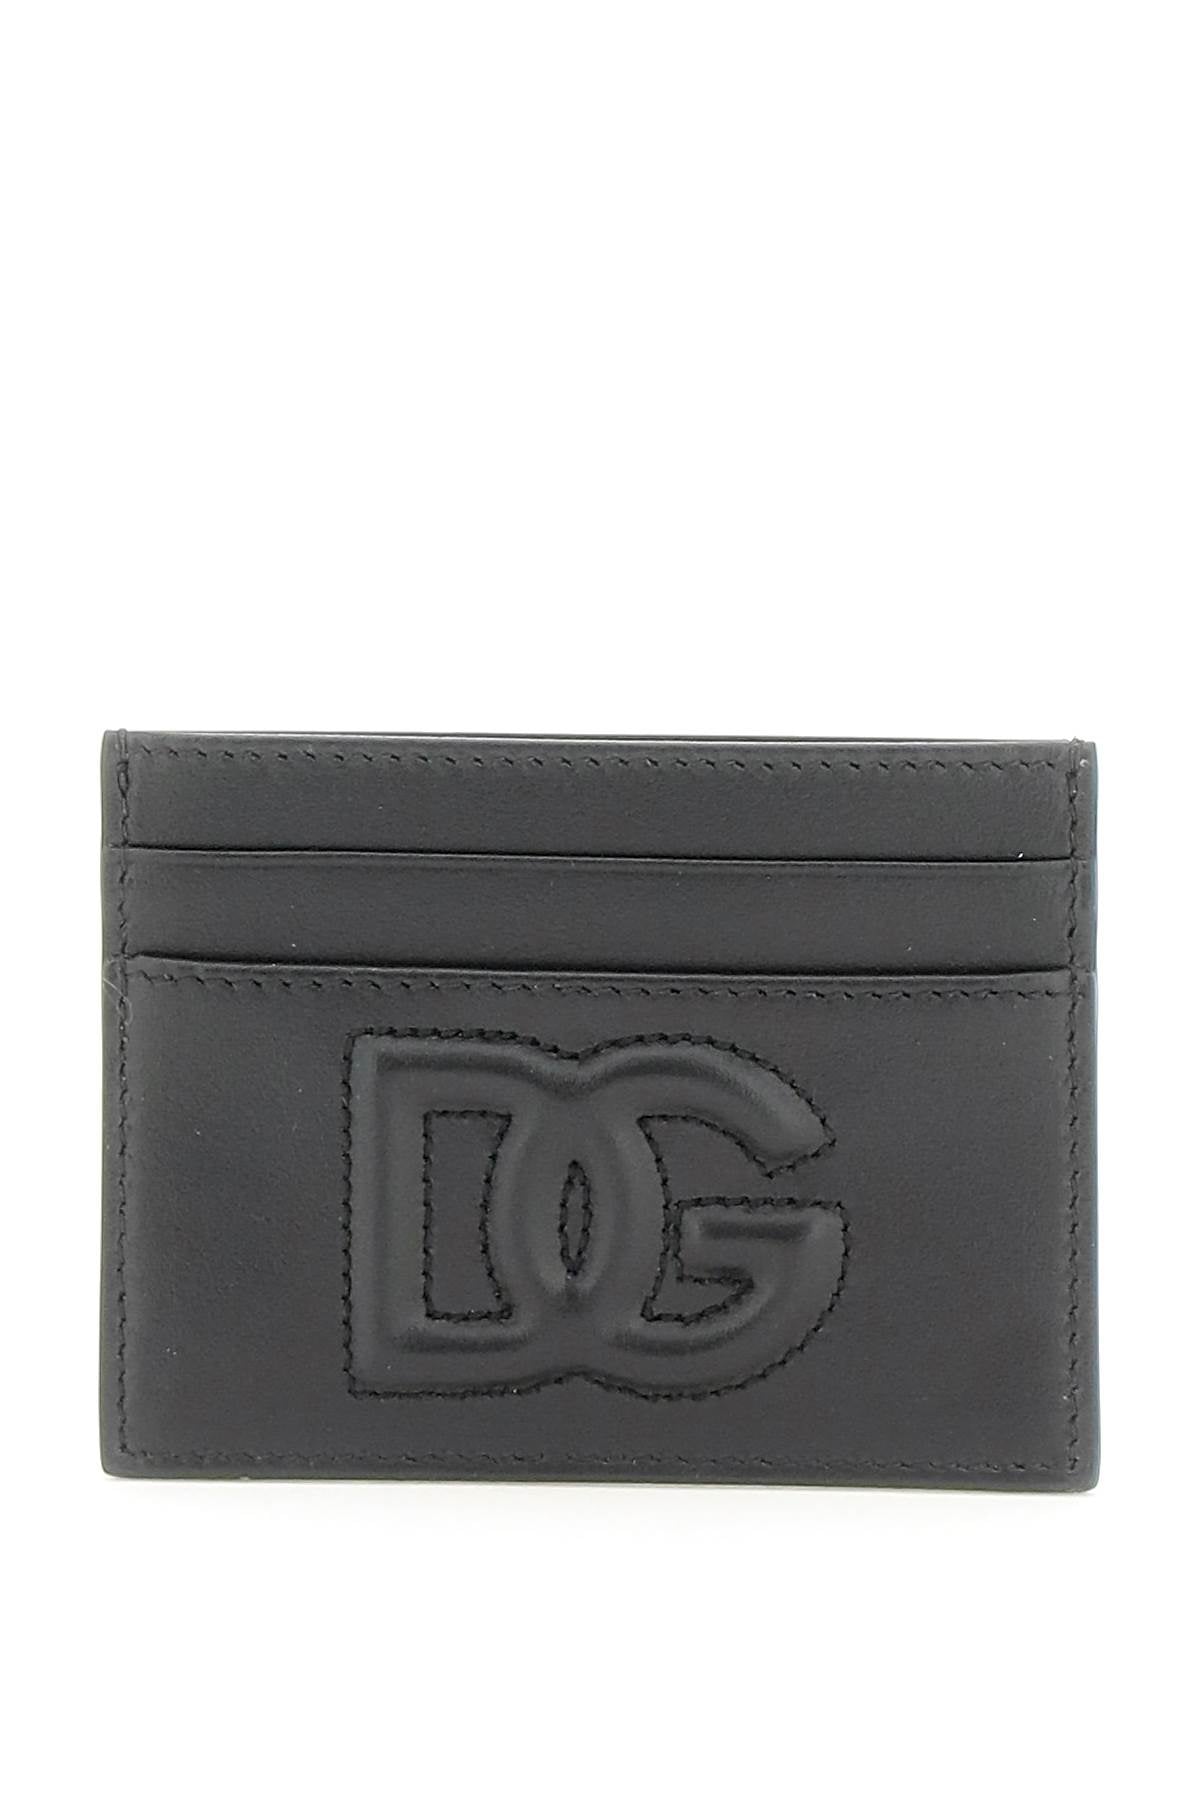 Dolce & gabbana cardholder with logo-0